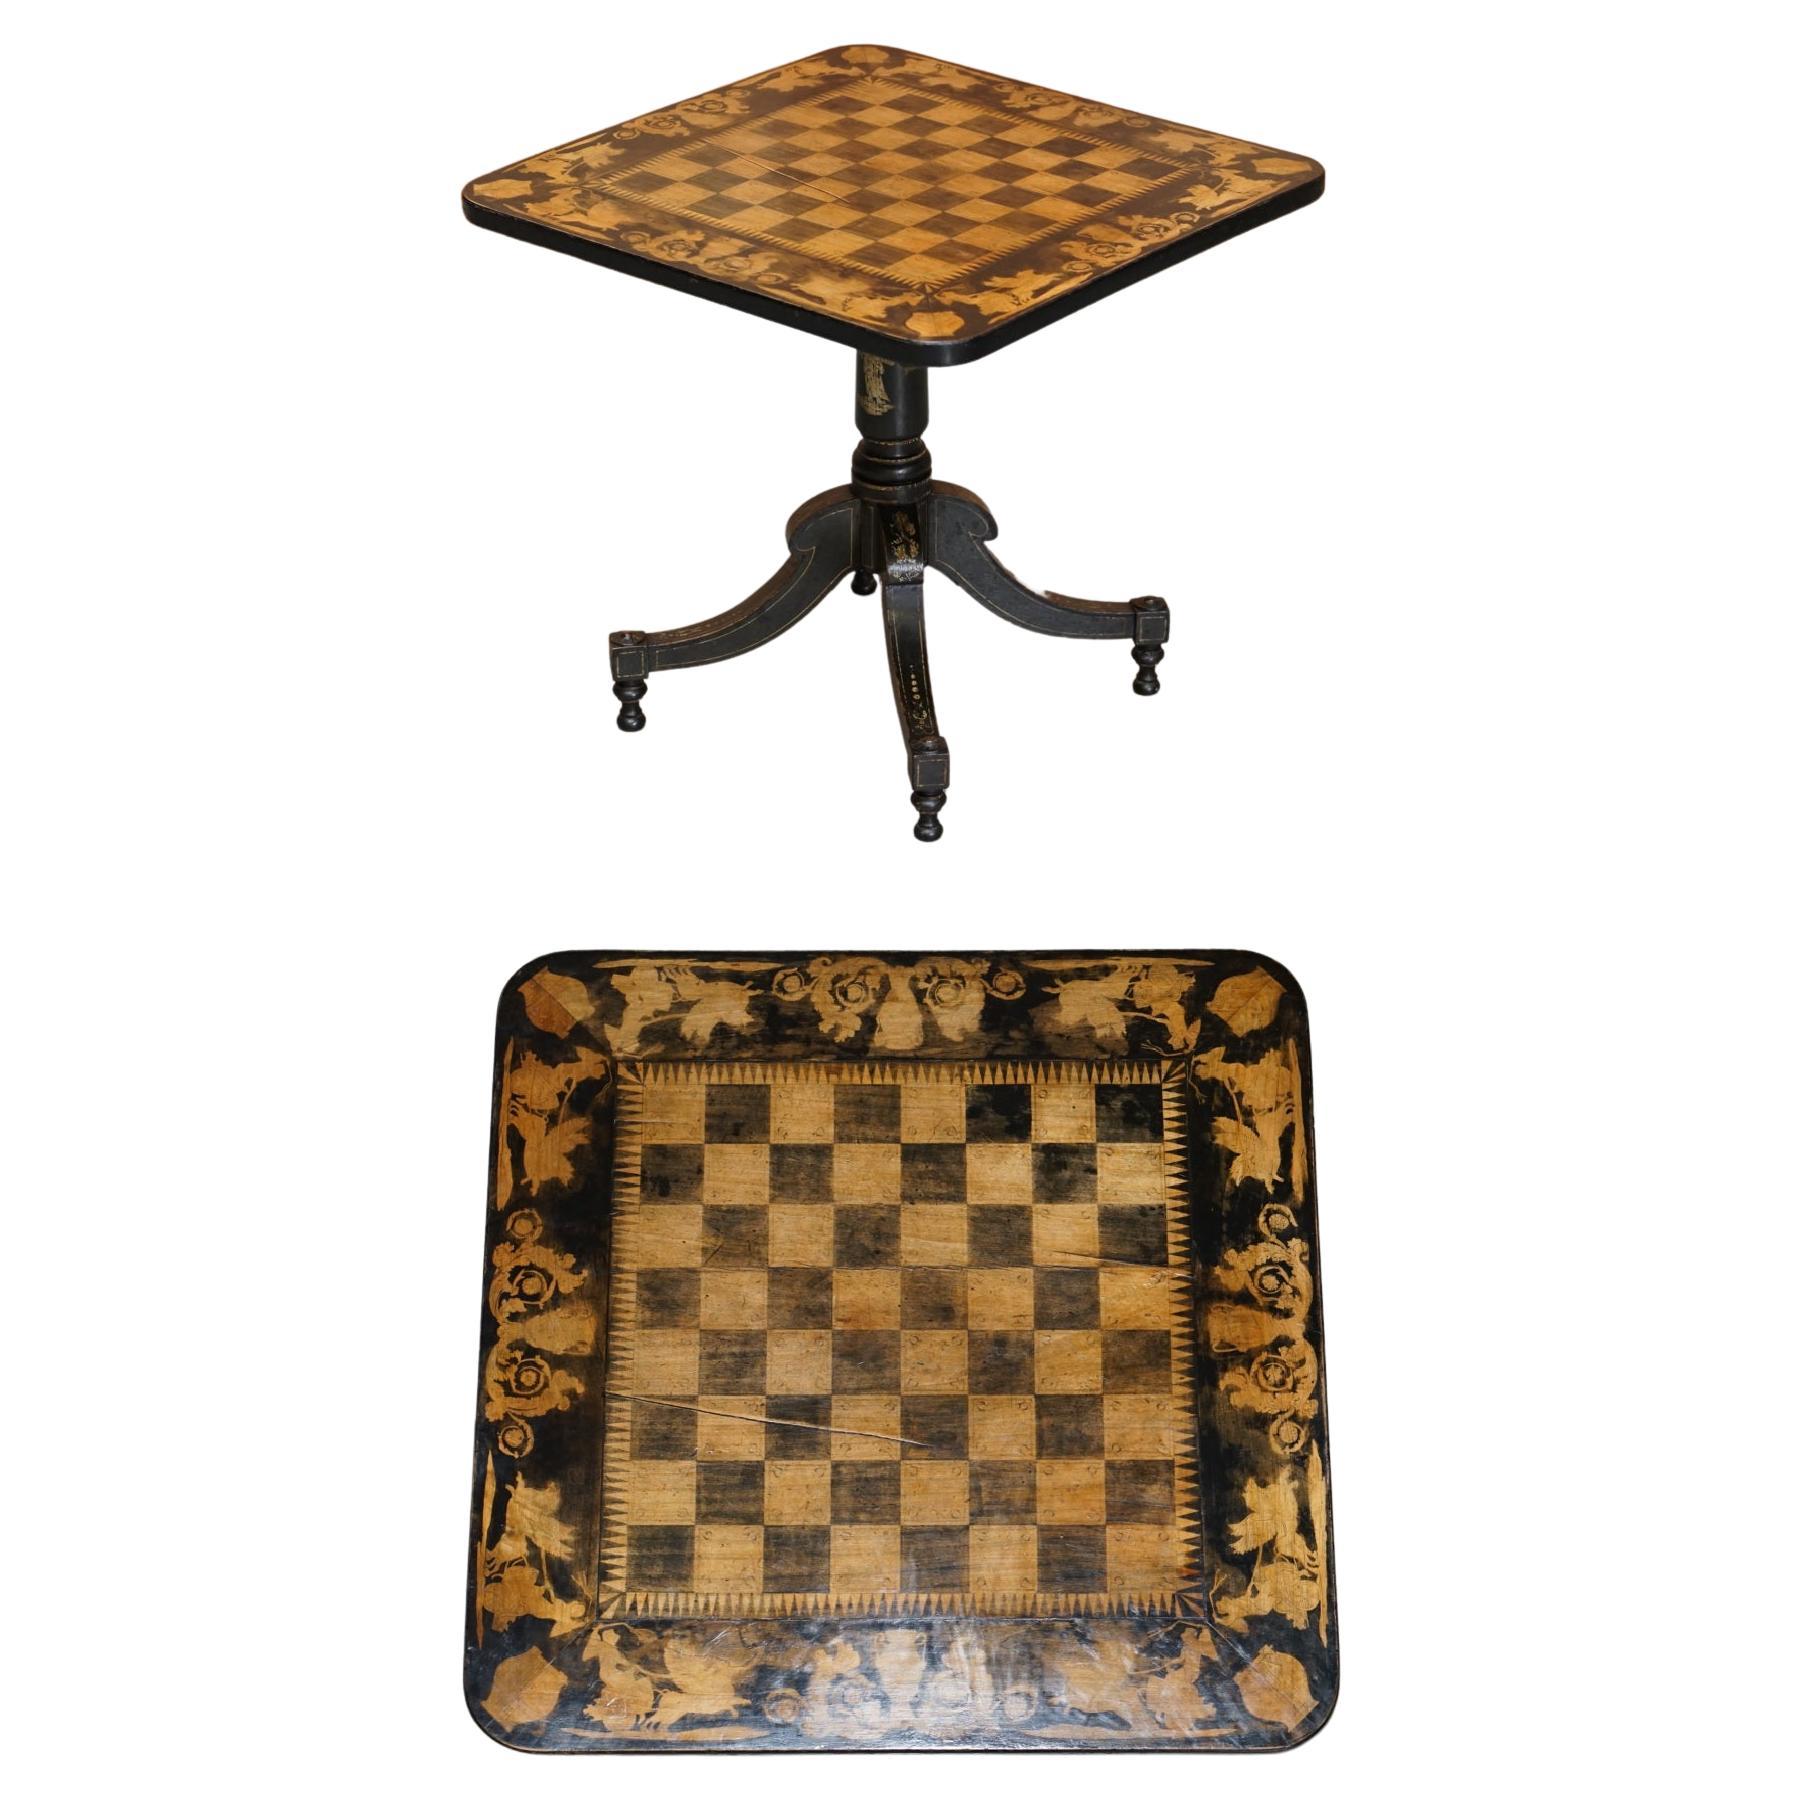 Stunning circa 1860 Gold Leaf Ebonised Chess Table Aesthetic Movement Taste